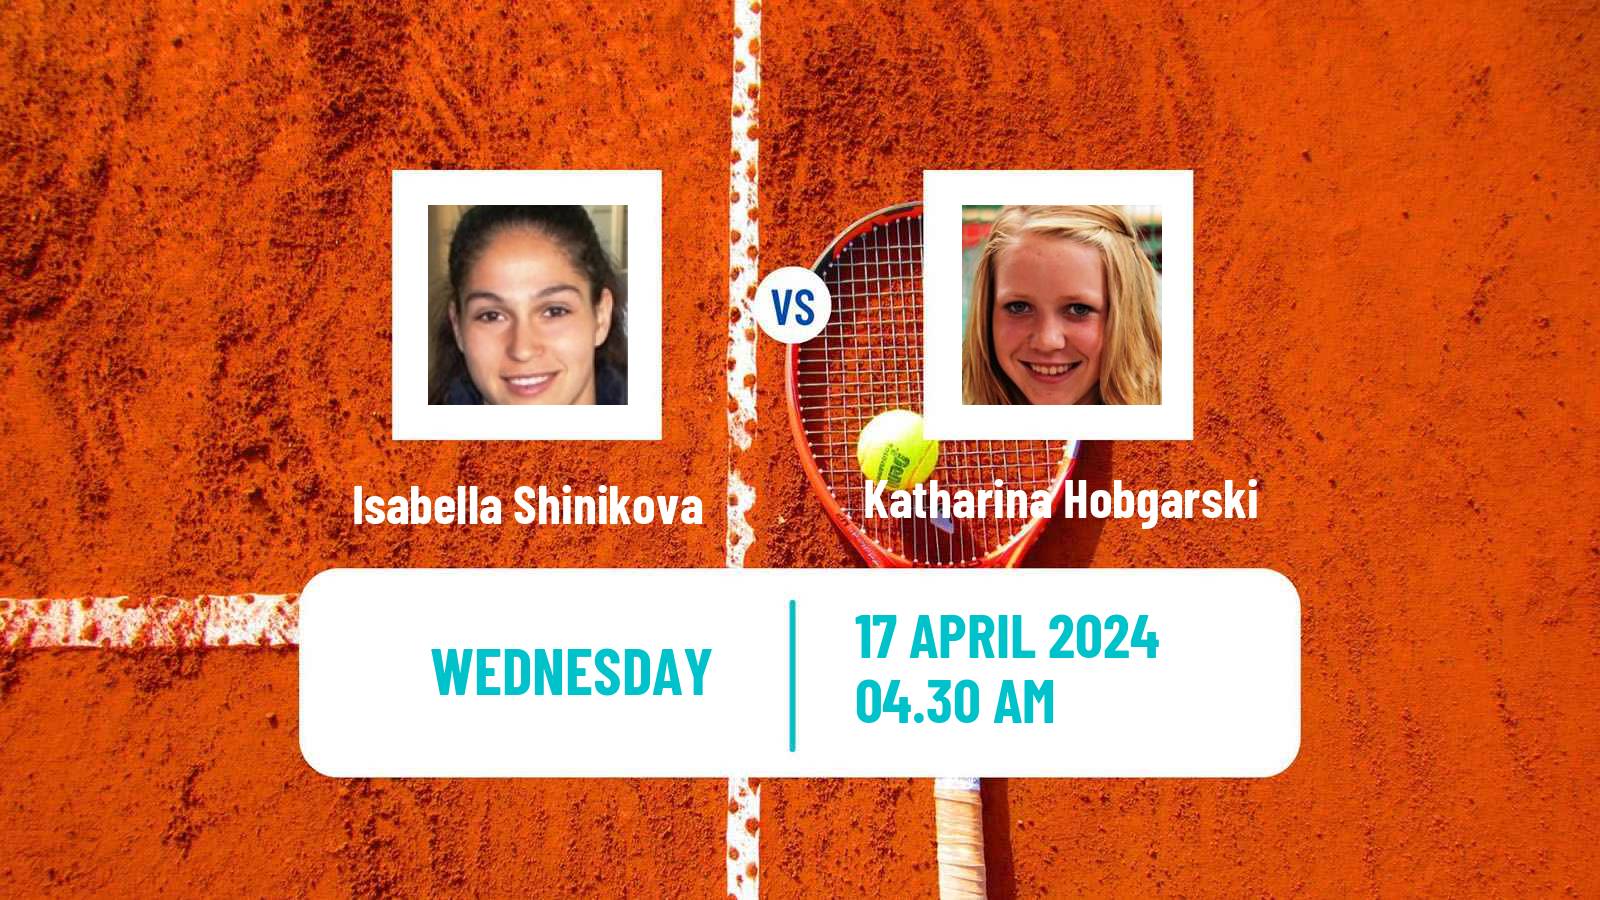 Tennis ITF W35 Hammamet 5 Women Isabella Shinikova - Katharina Hobgarski